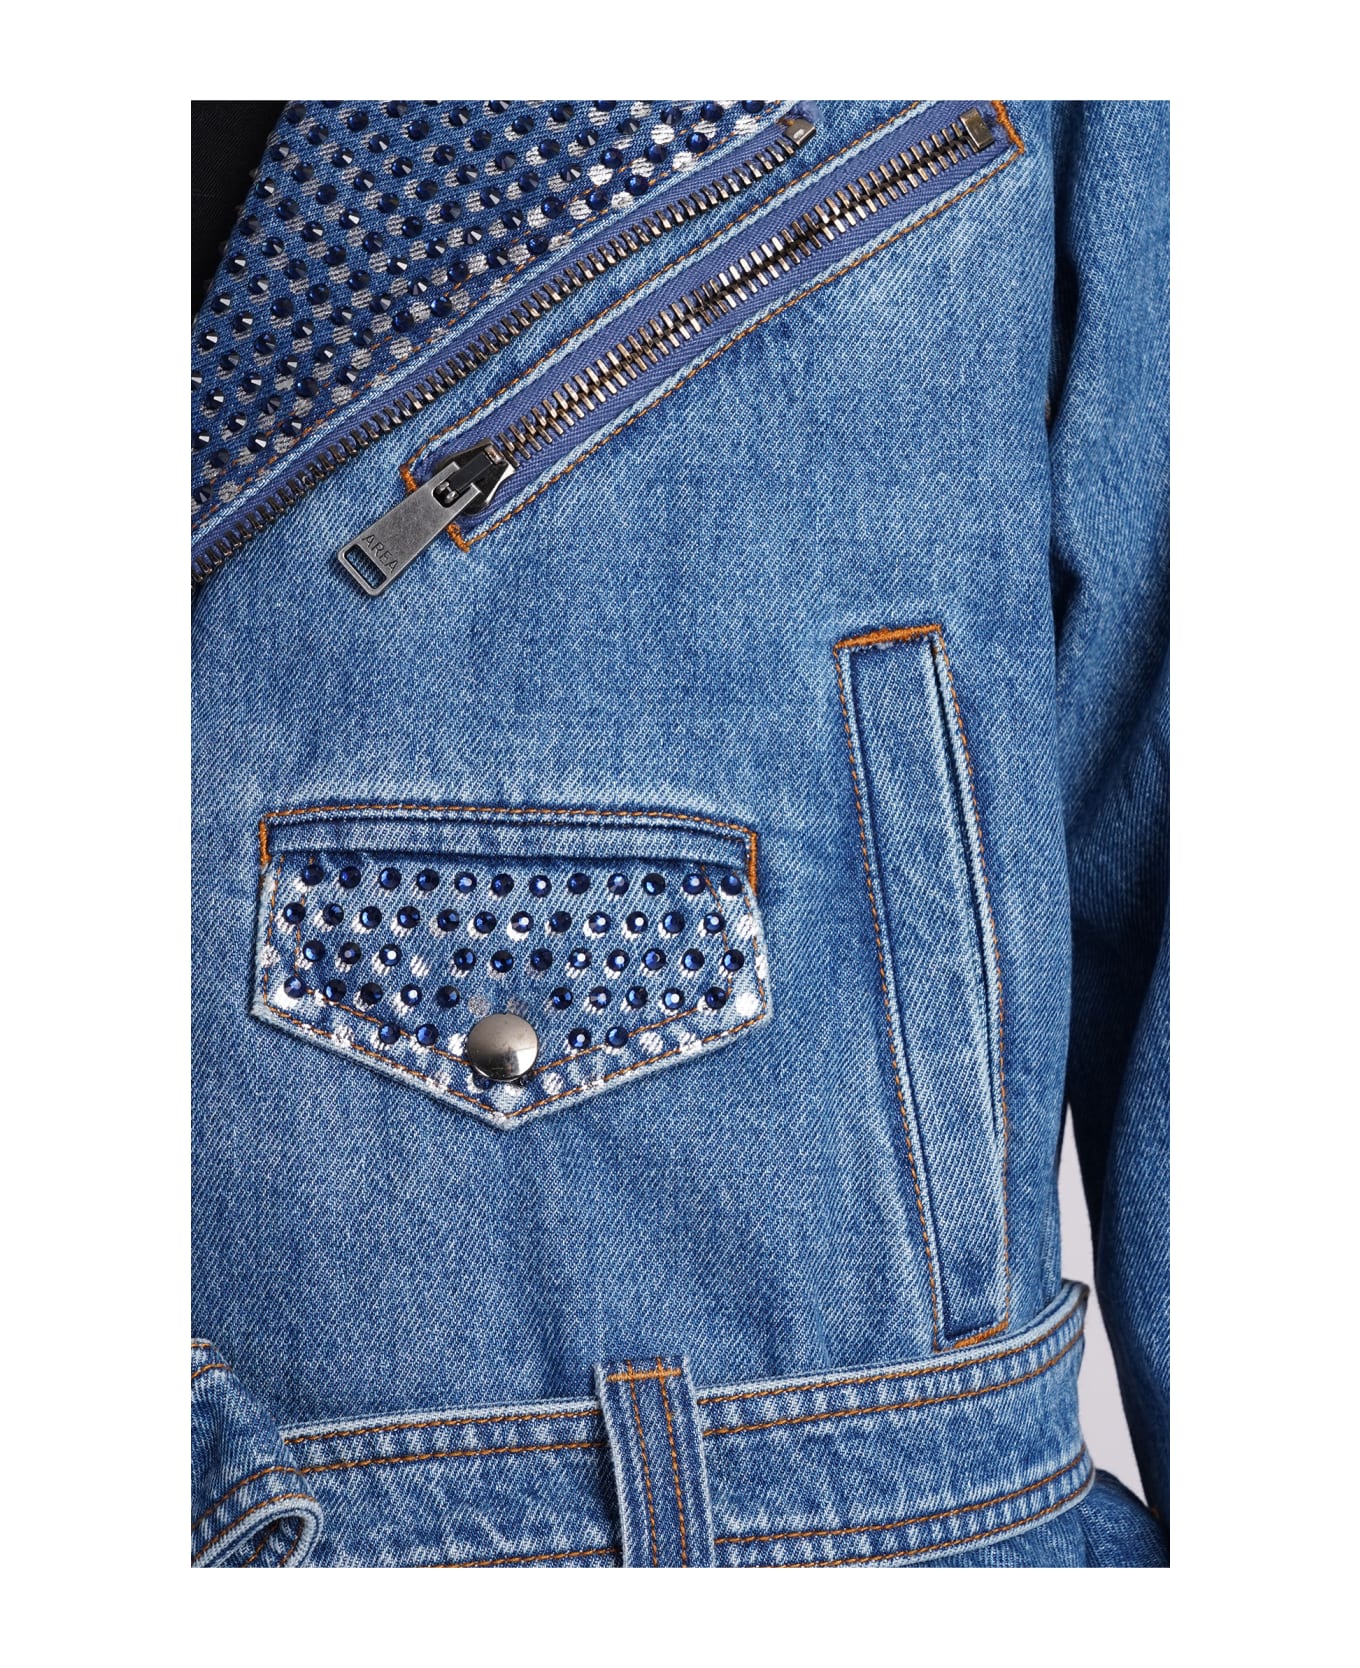 AREA Denim Jackets In Blue Cotton - blue